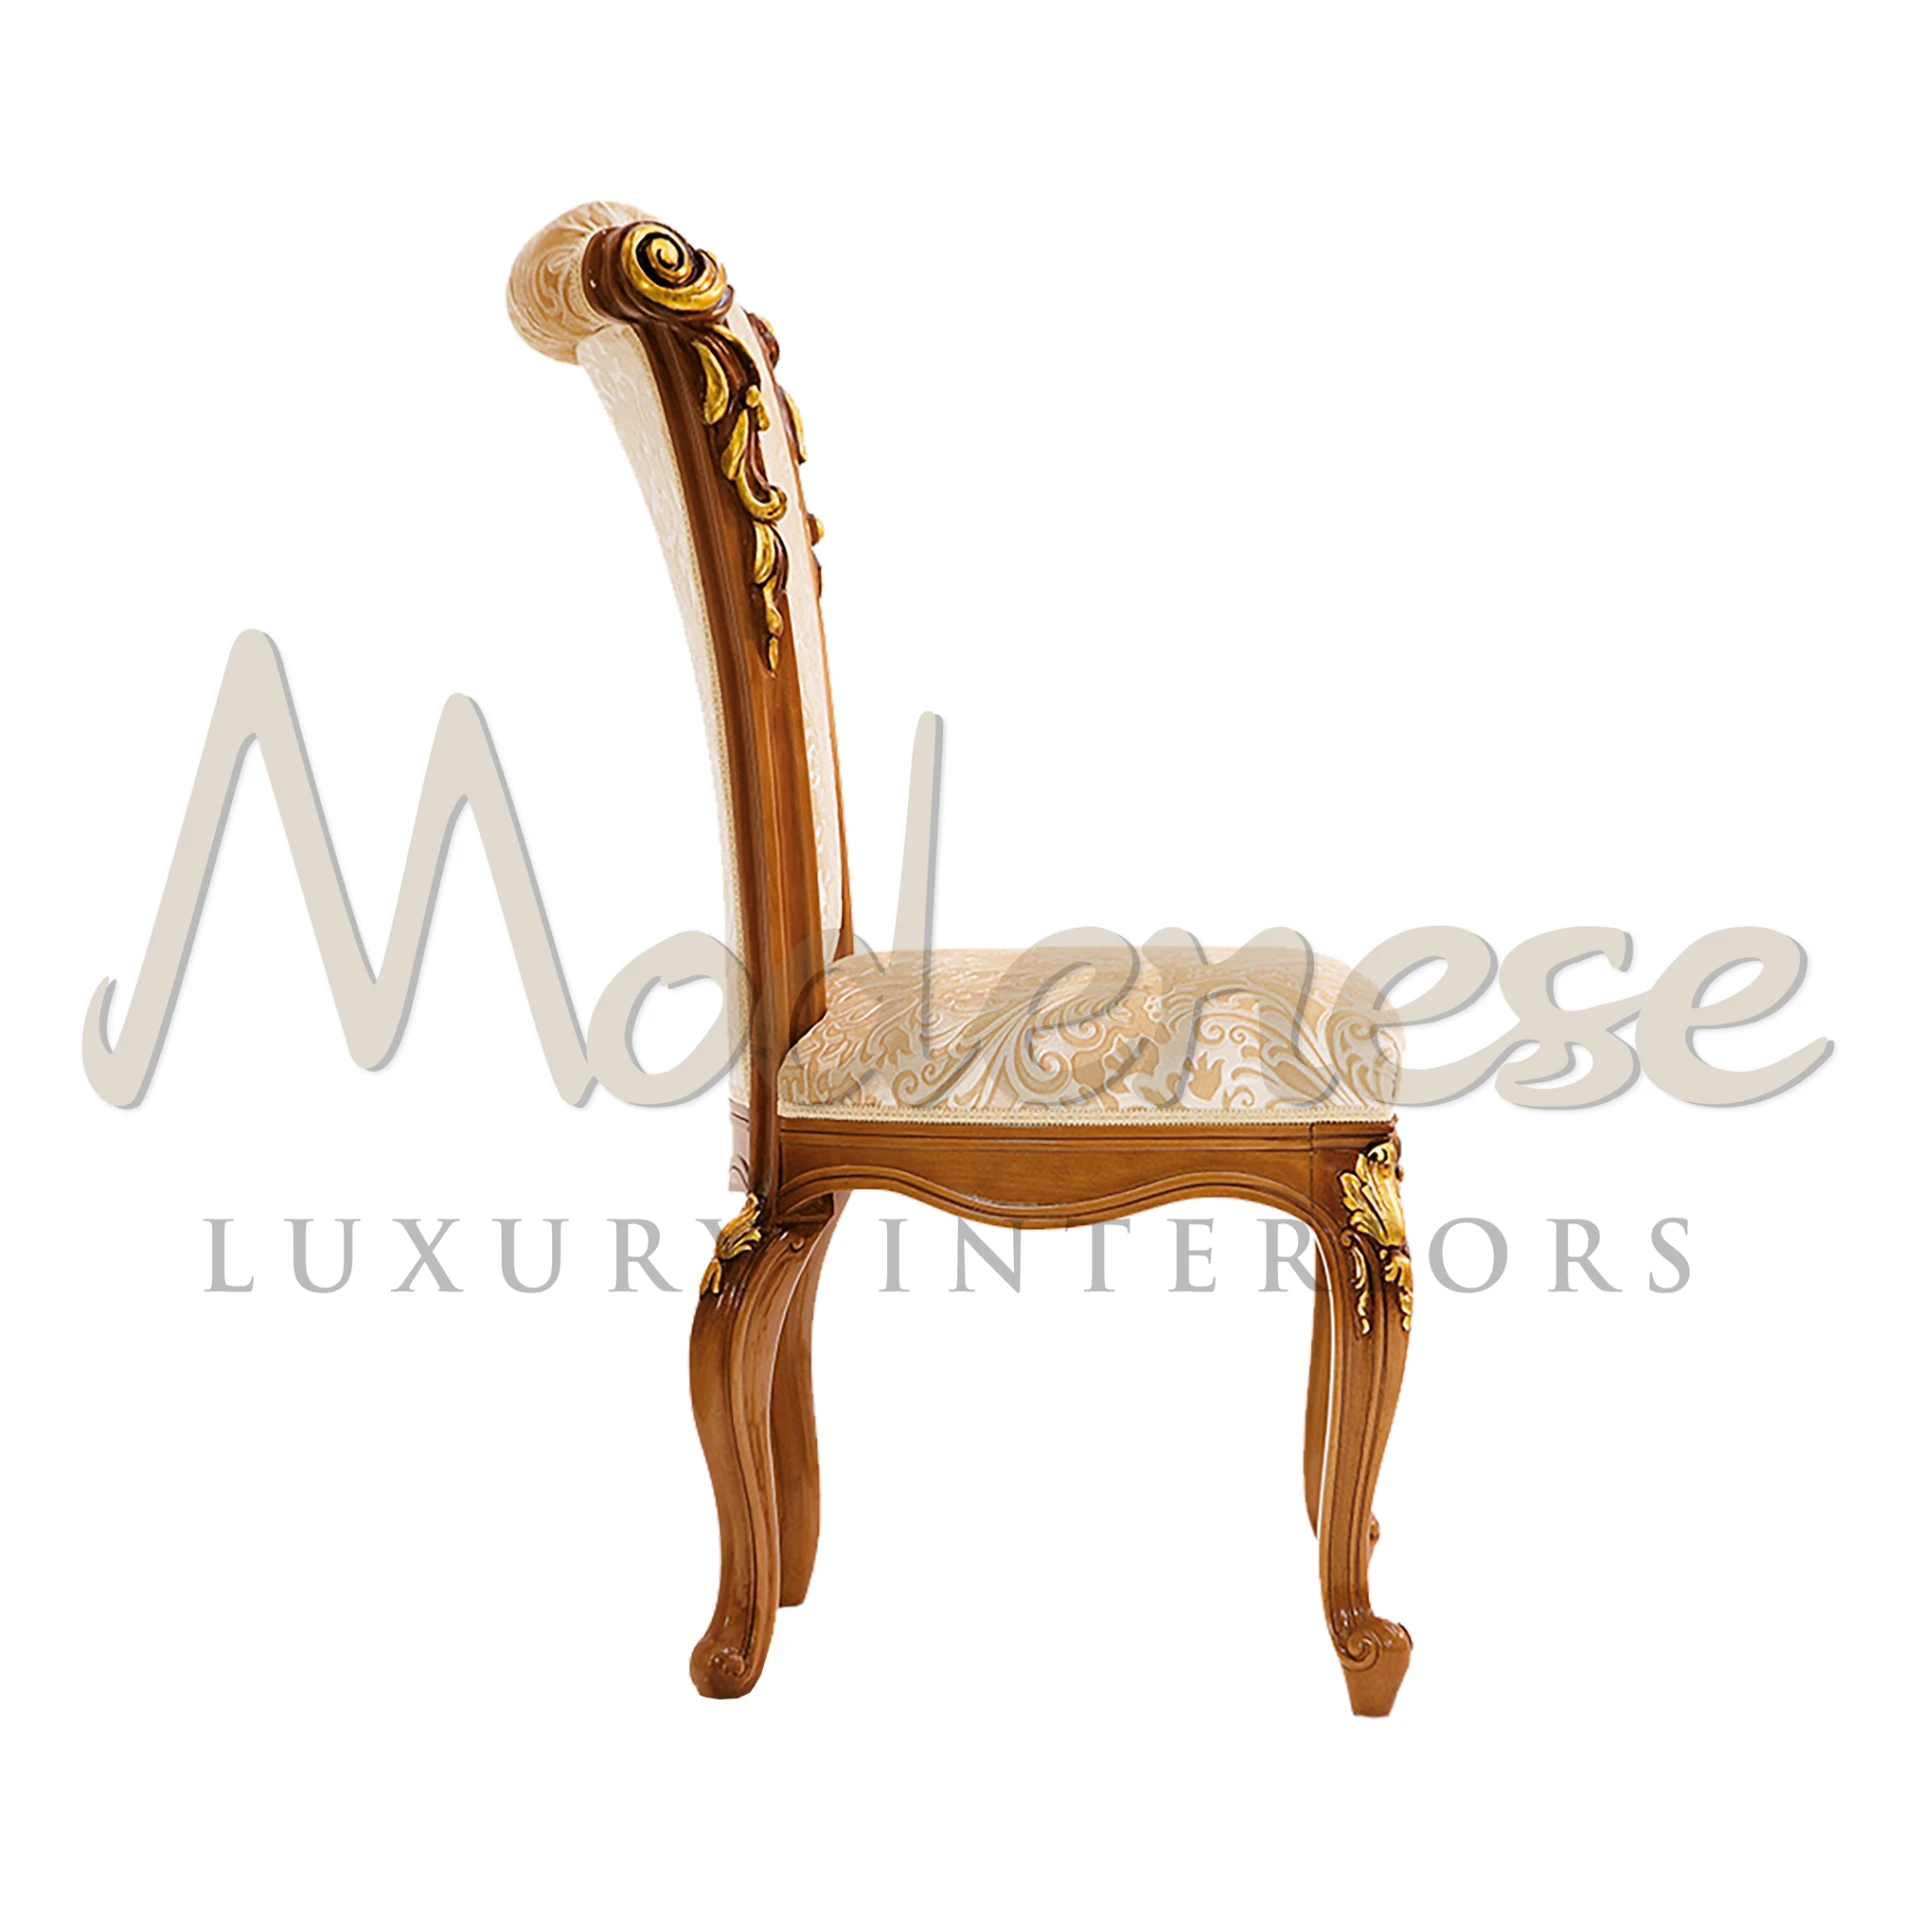 Modenese Furniture presents a grand imperial chair, blending handmade gold leaf details, light cherry wood, and luxurious ivory velvet for timeless elegance.